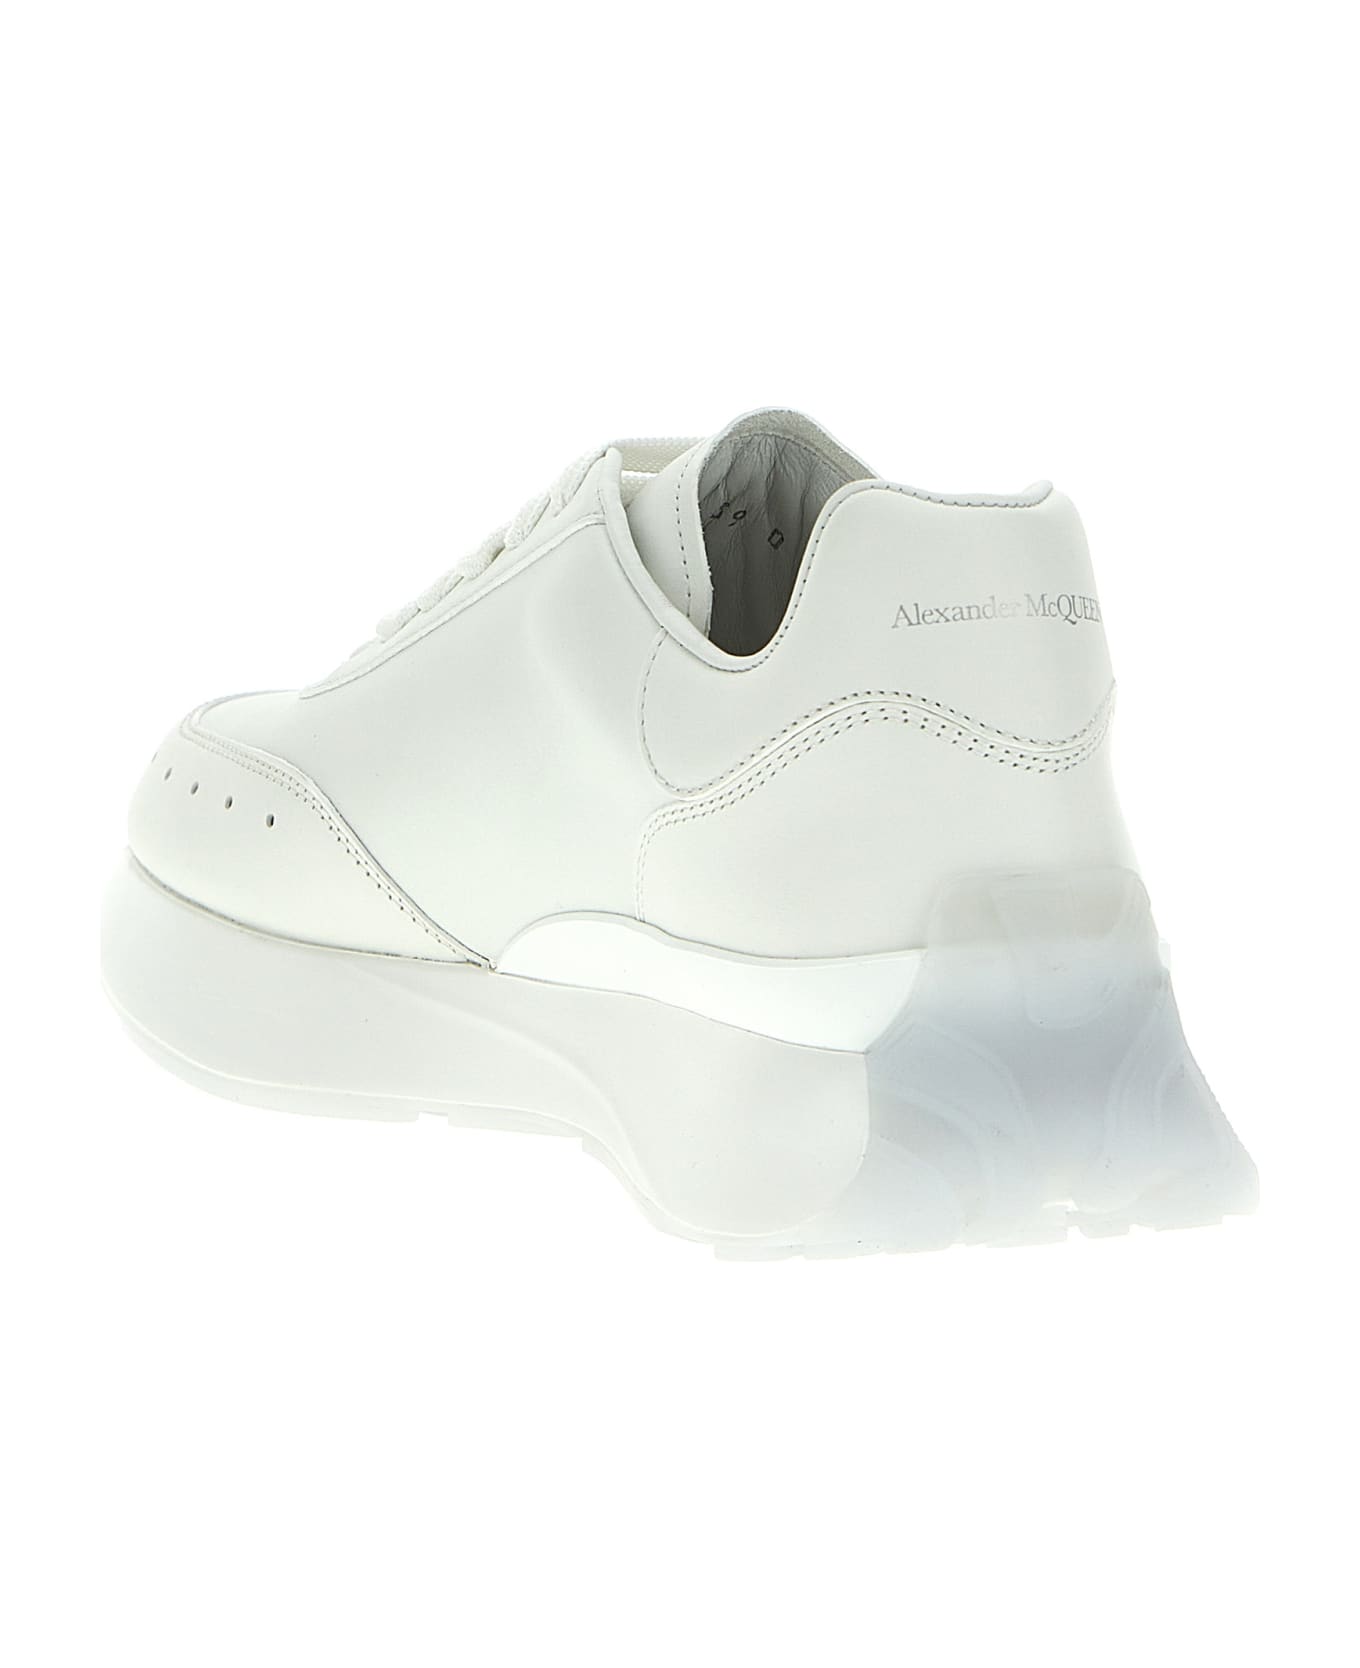 Alexander McQueen Sprint Runner Sneakers - White スニーカー